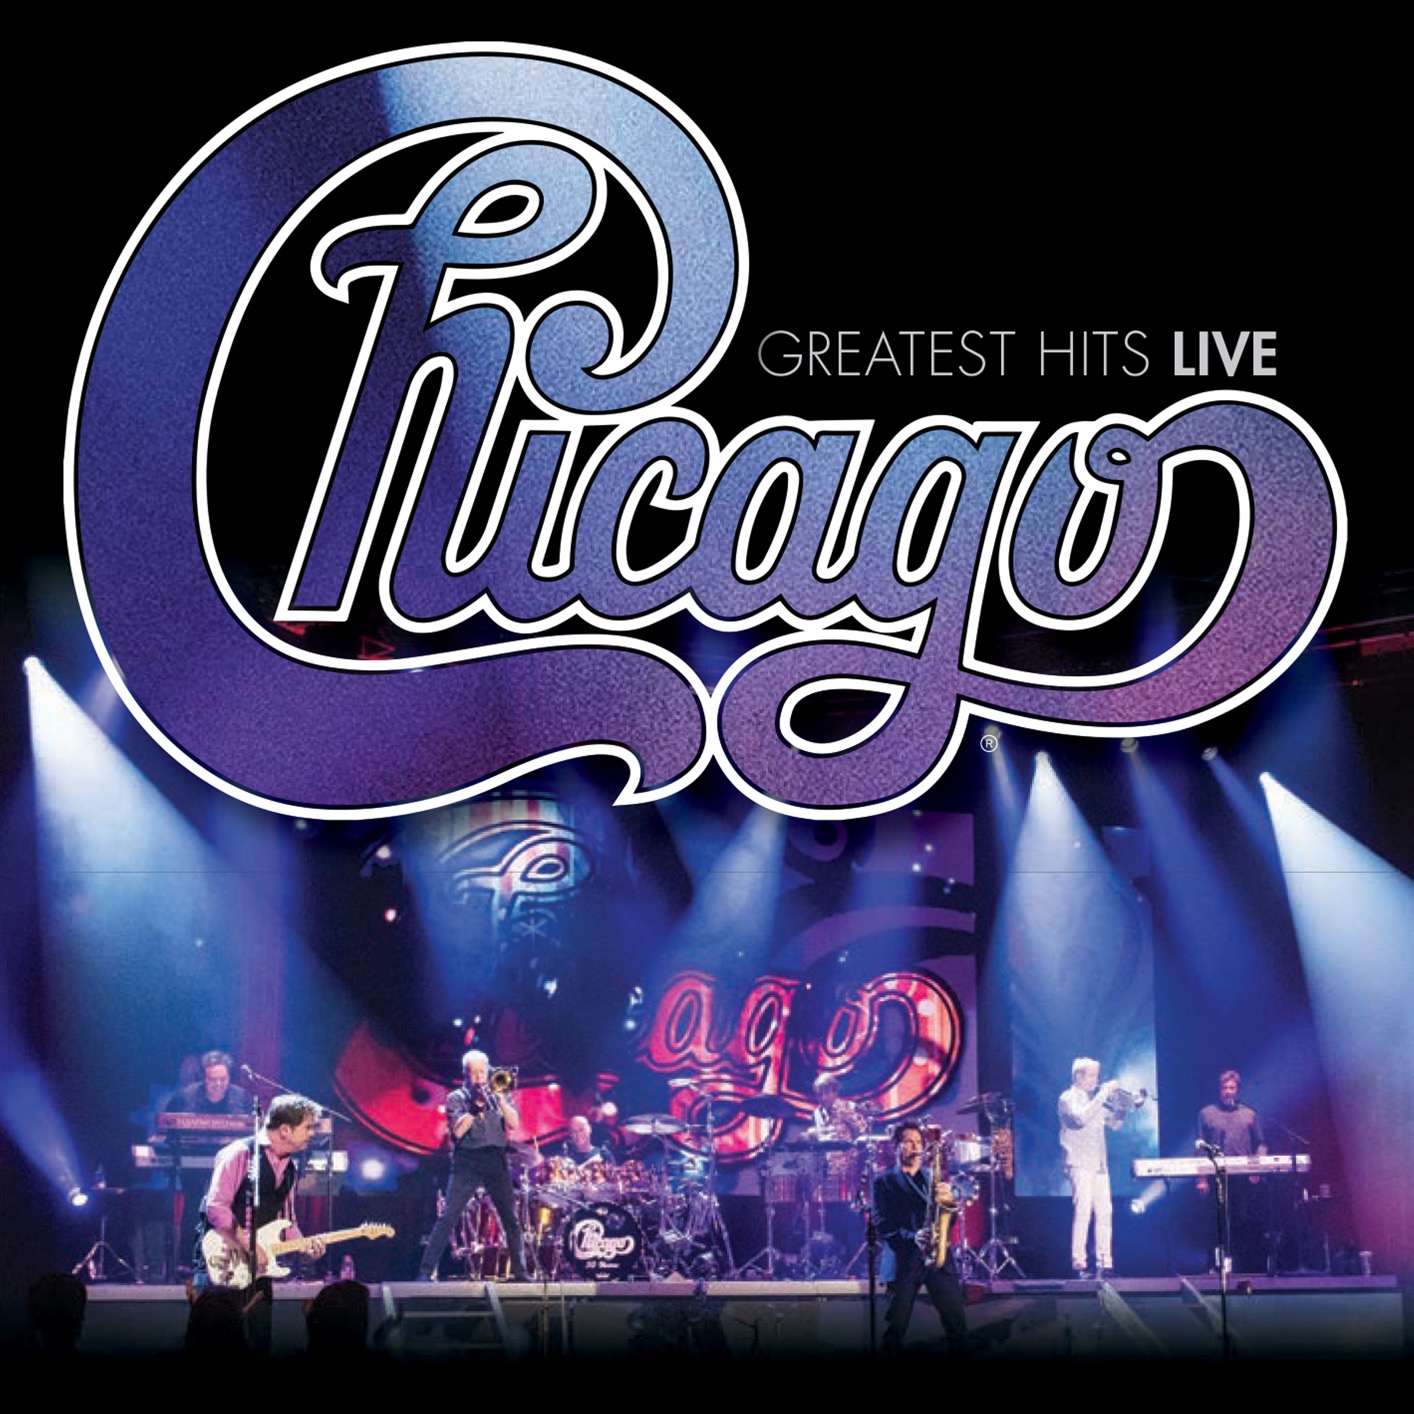 Chicago - Greatest Hits Live (2018) [FLAC 24bit/48kHz]